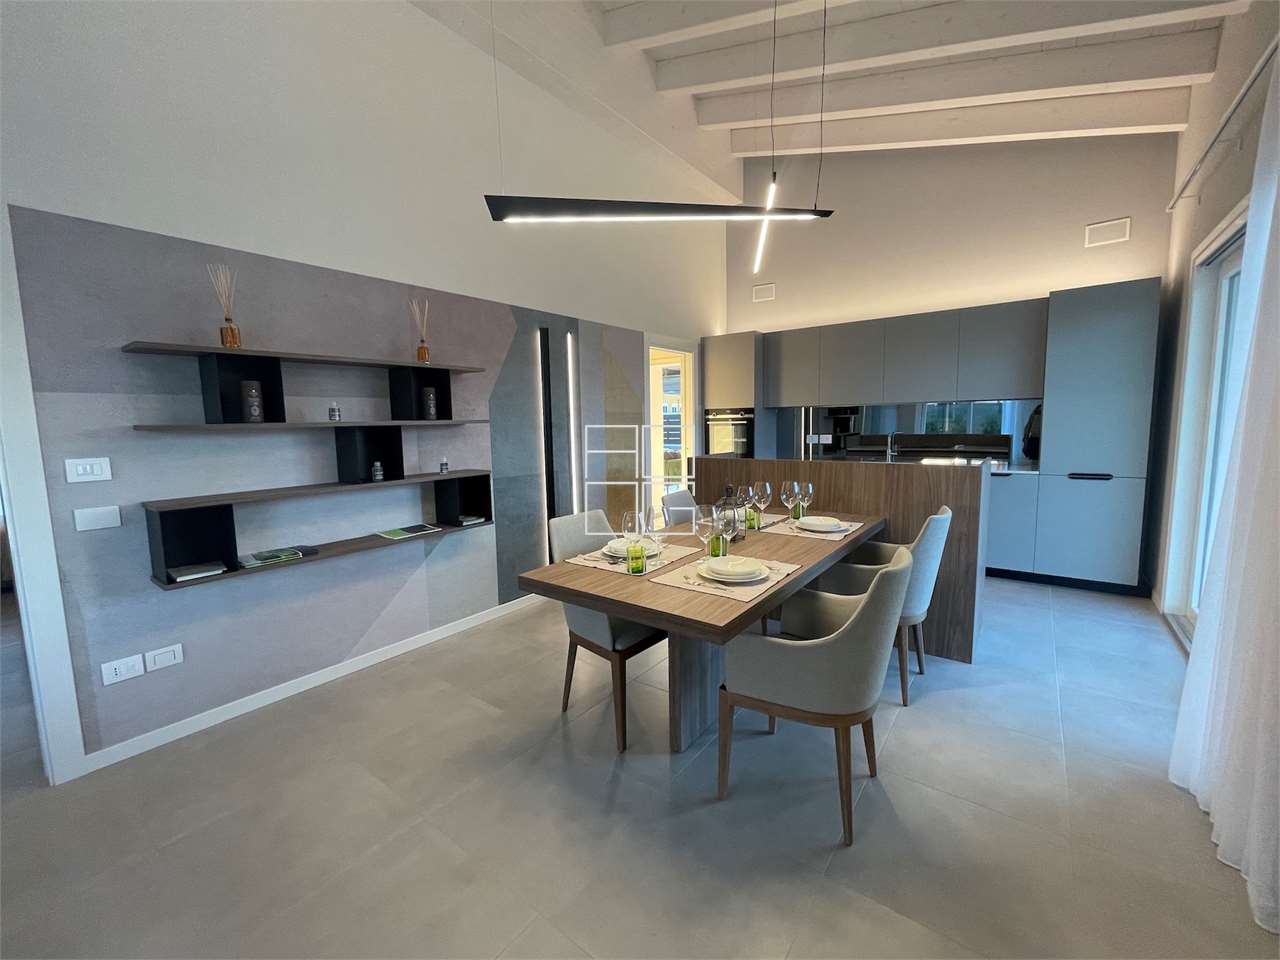 Neues Klasse-A-Einfamilienhaus in modernem Stil in Lonato del Garda